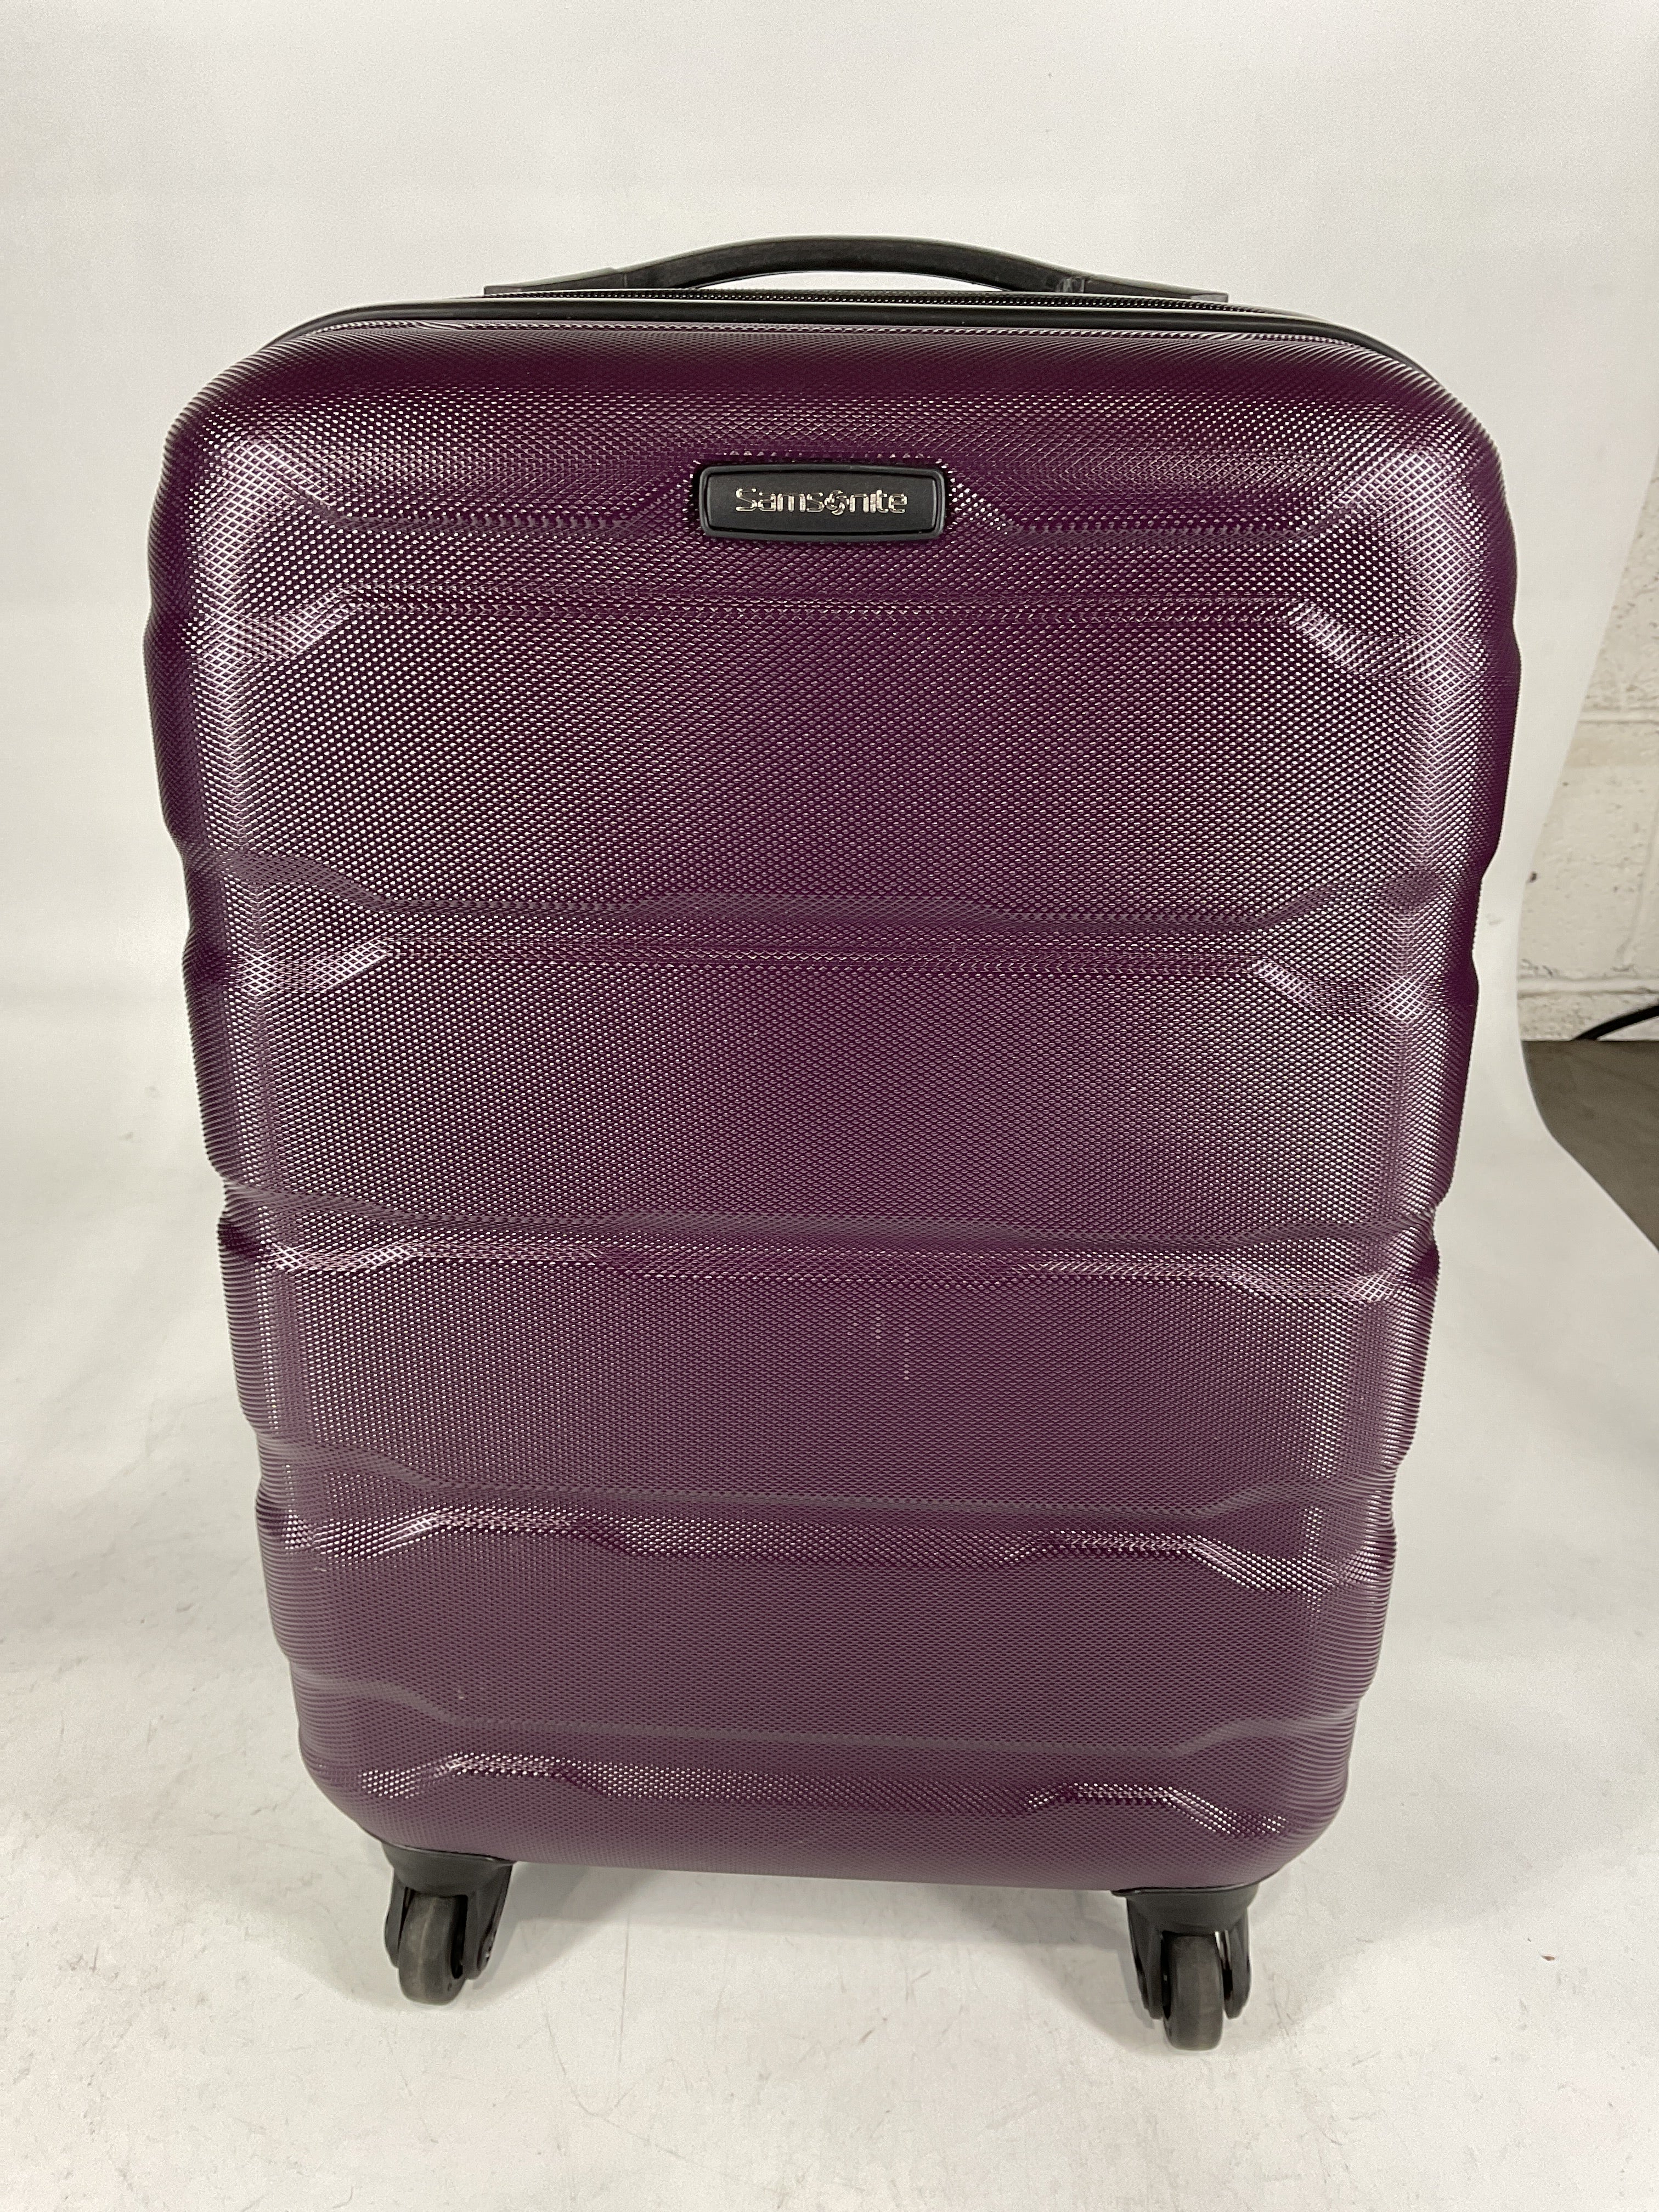 Samsonite Omni Pc Hardside Expandable Luggage with Spinner Wheels U5